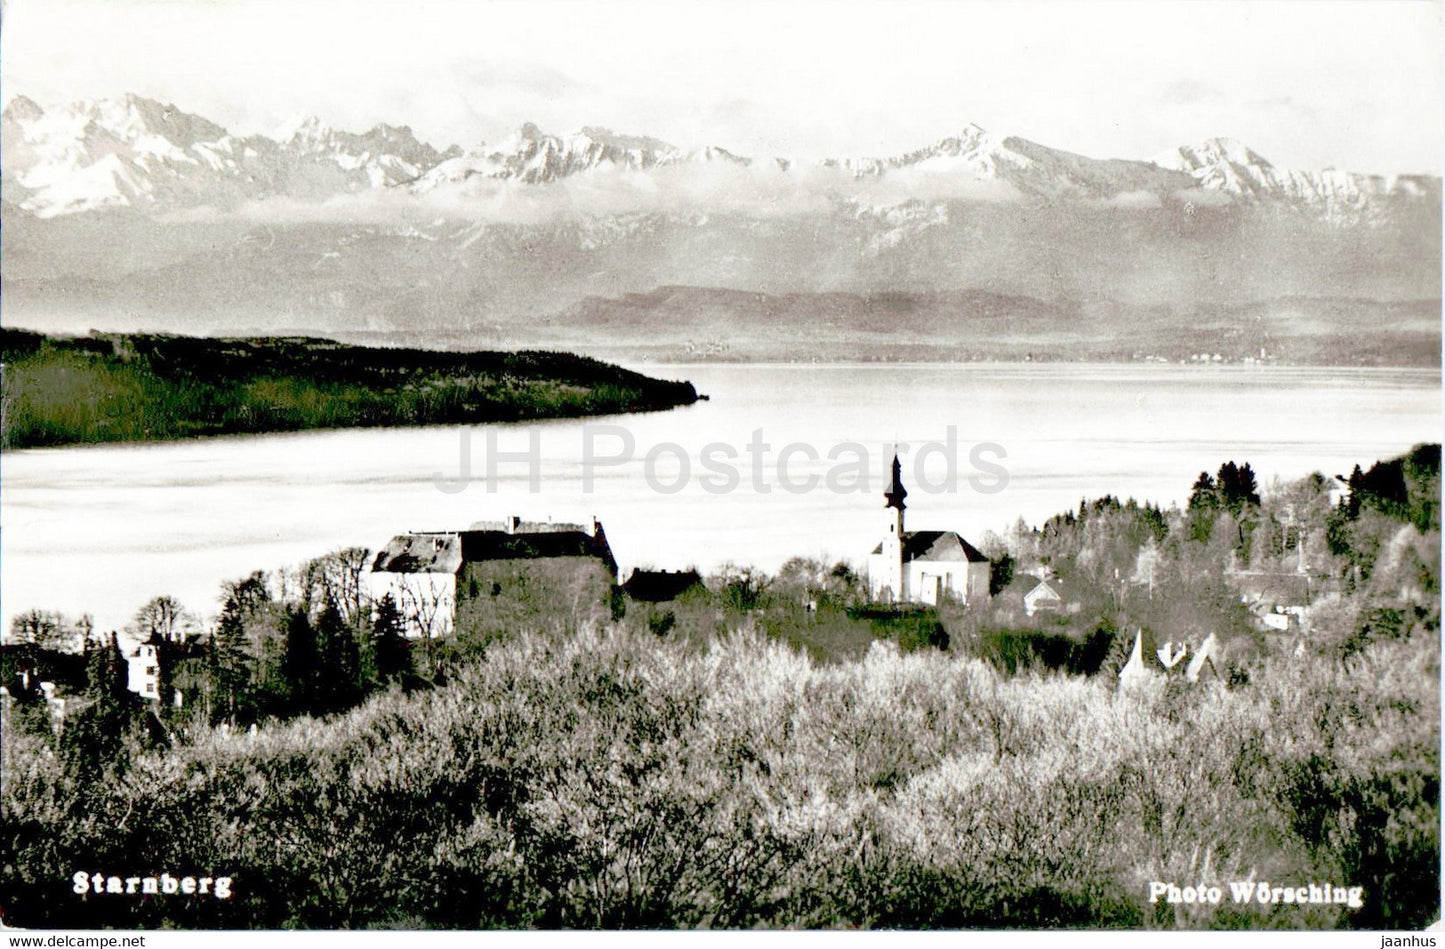 Starnberg - Photo Worsching - 1961 - Germany - used - JH Postcards